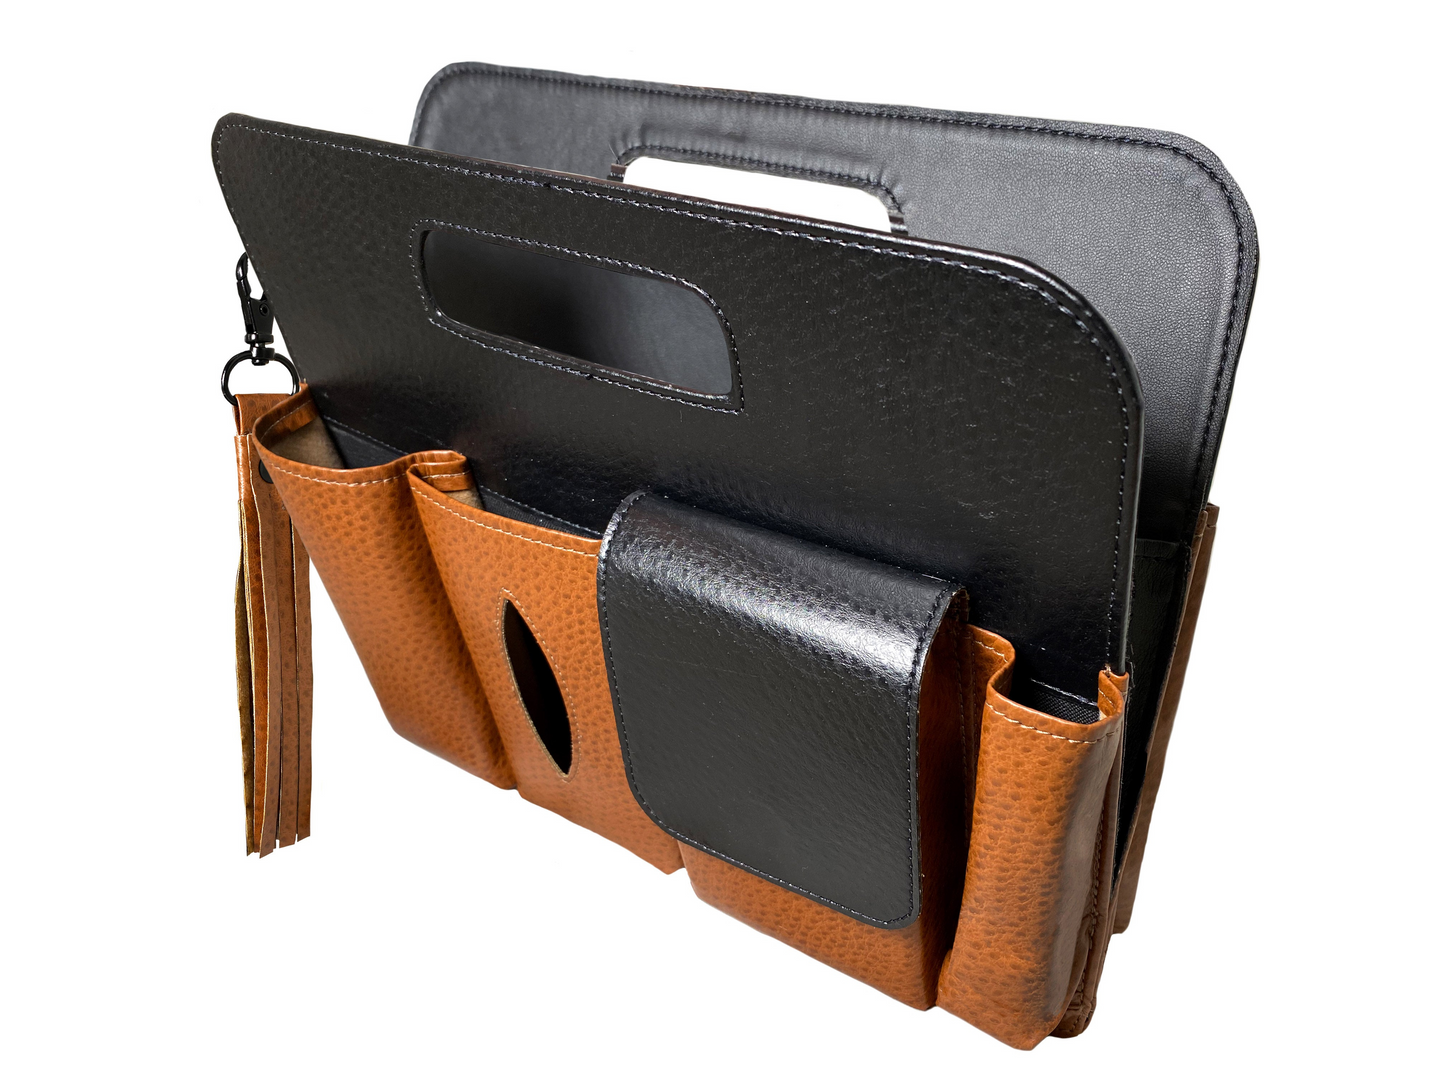 The Personalized Lightweight Leather Handbag Insert - Hammacher Schlemmer